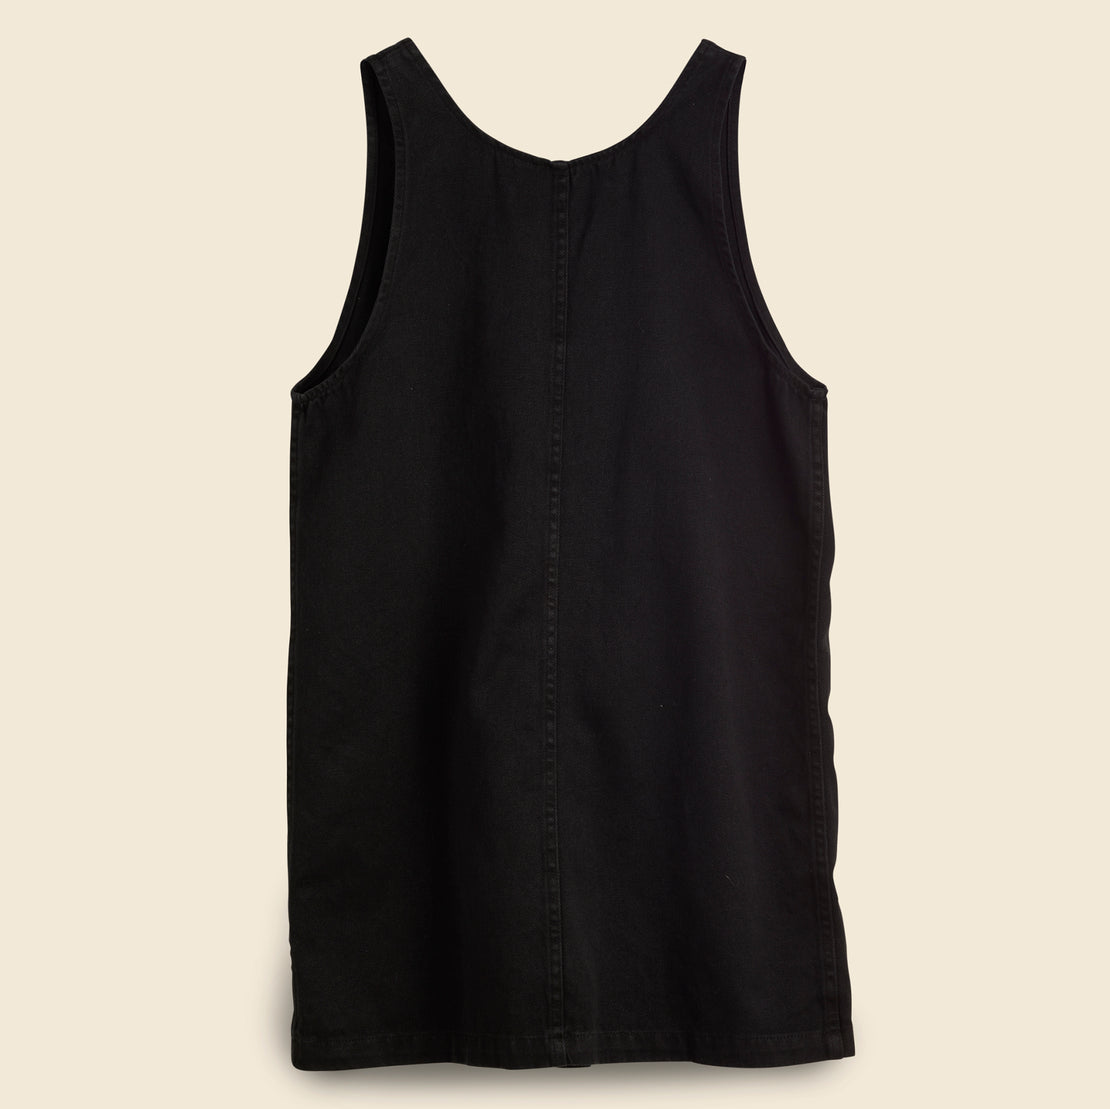 Jumper Dress - Black - Jungmaven - STAG Provisions - W - Onepiece - Dress